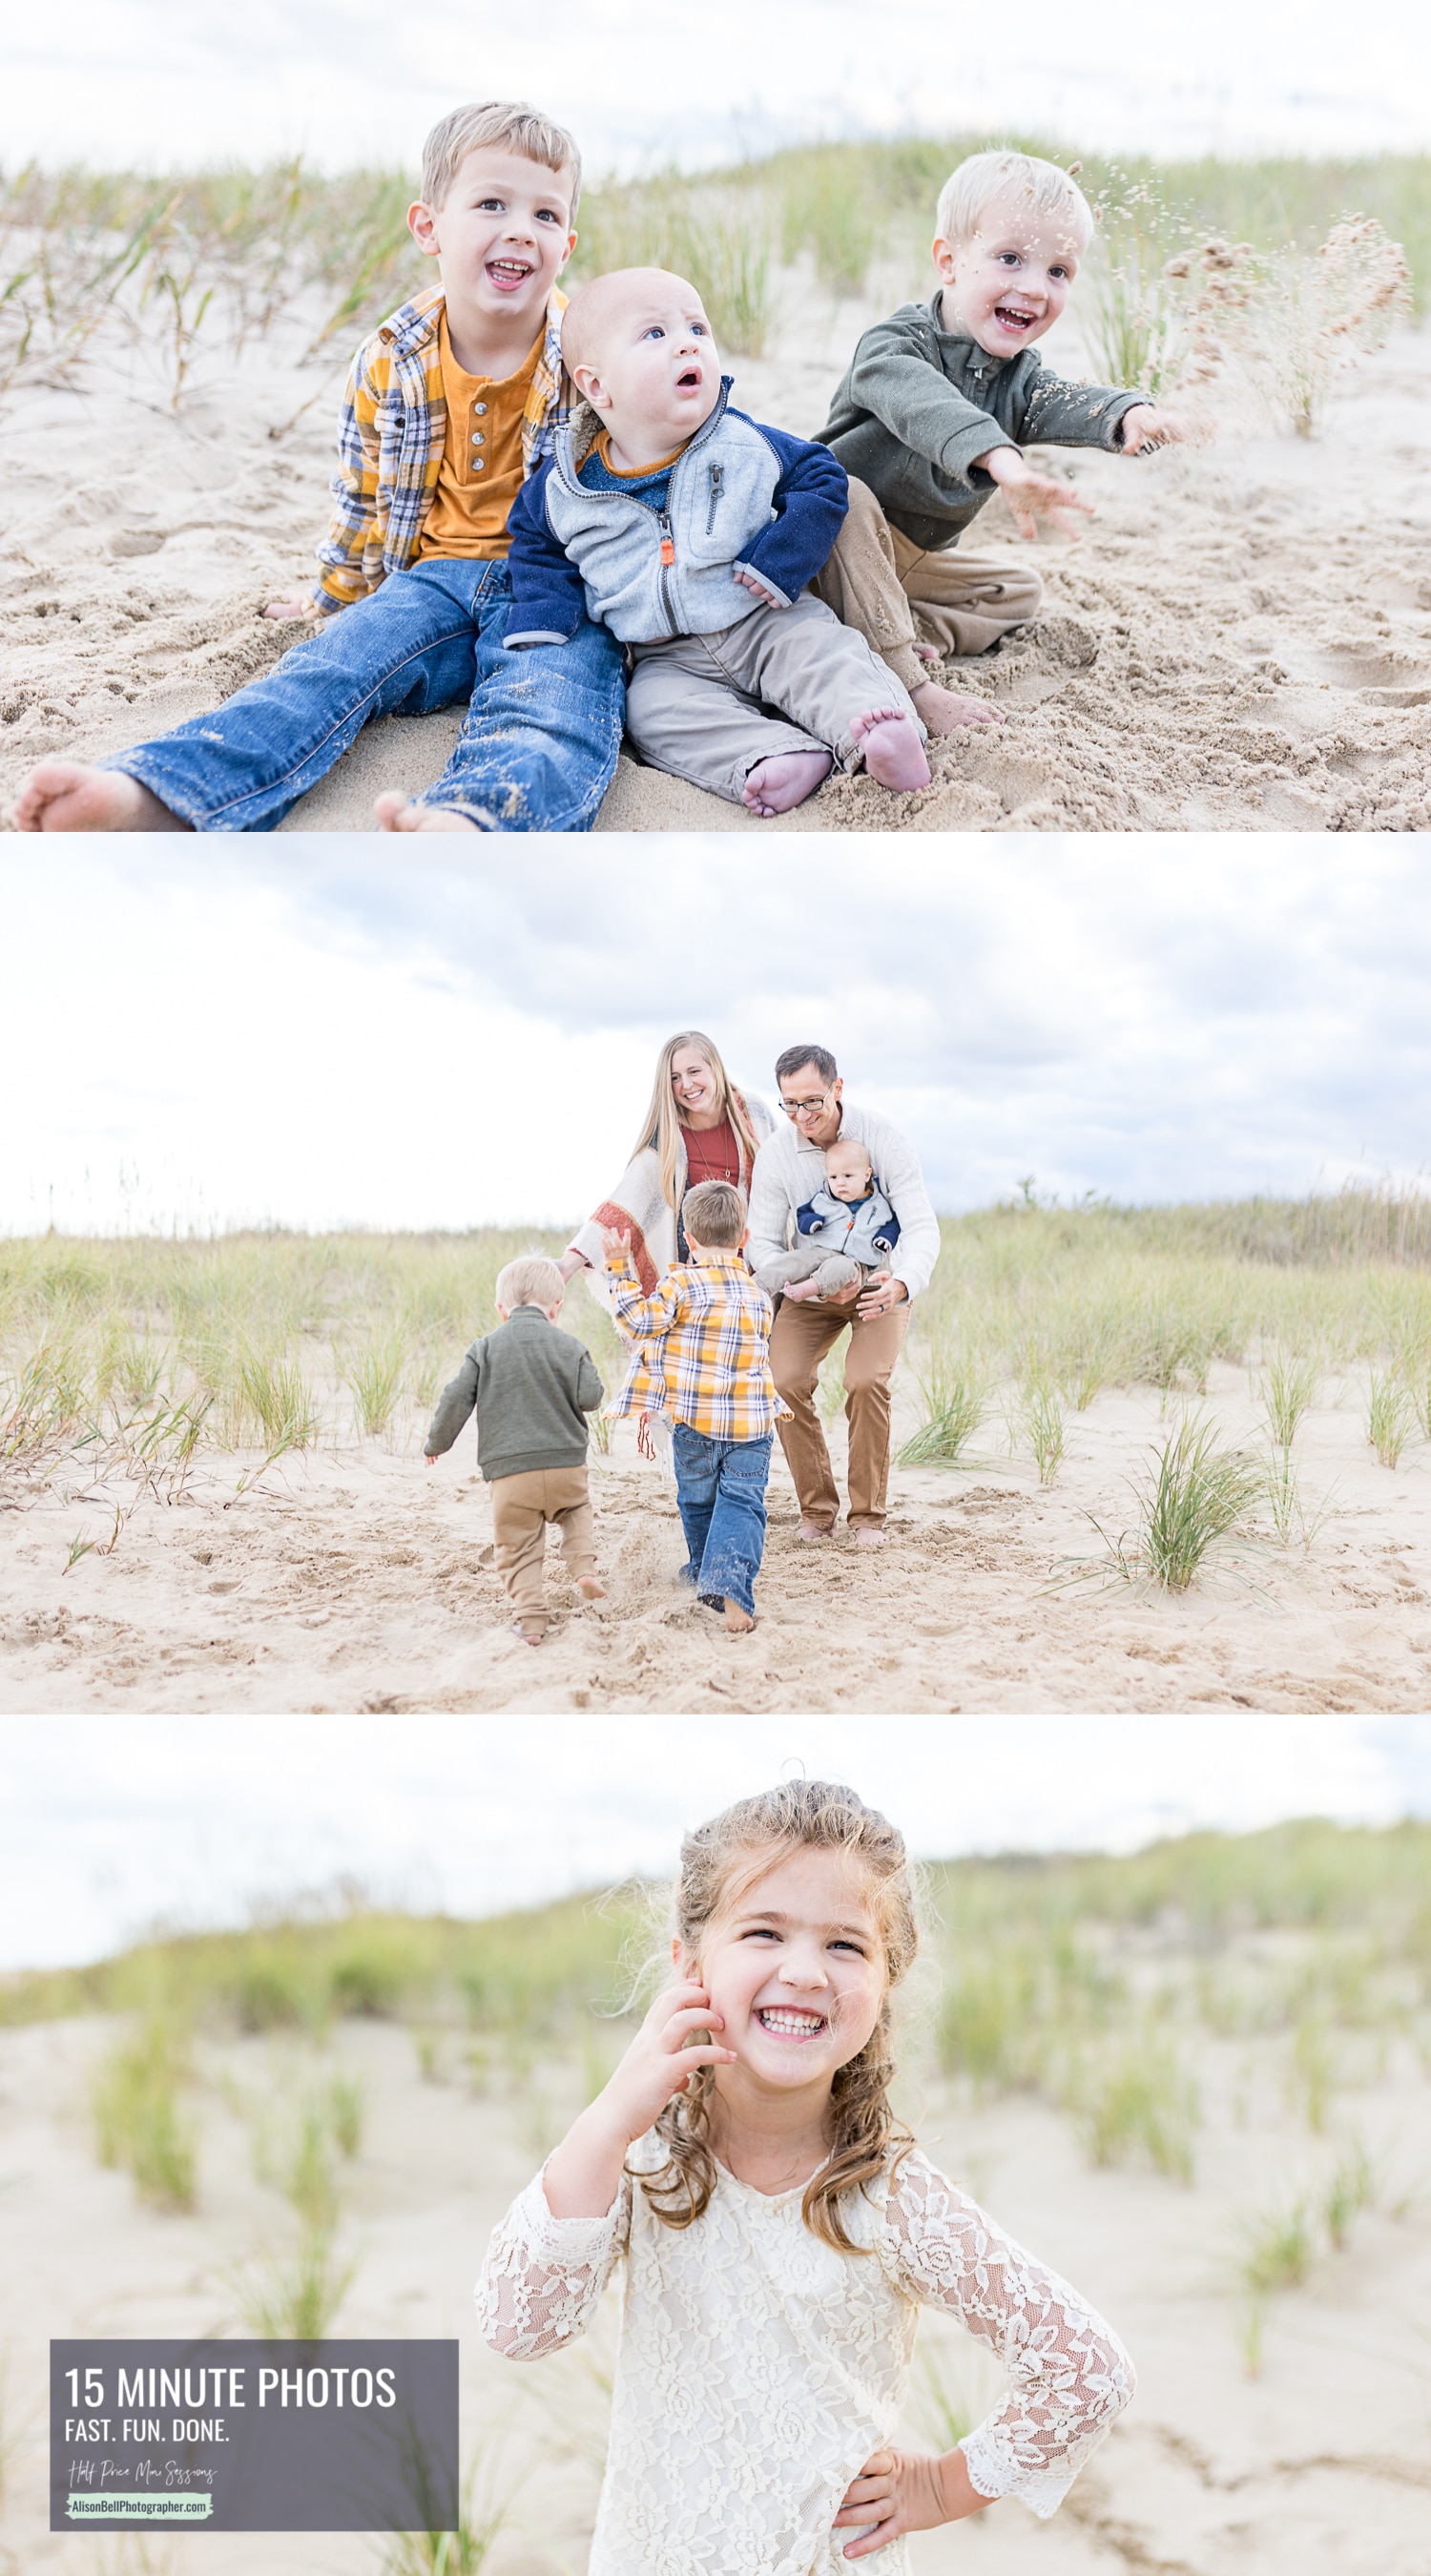 Fast, fun family photographer in virginia Beach. Alison Bell, Photographer